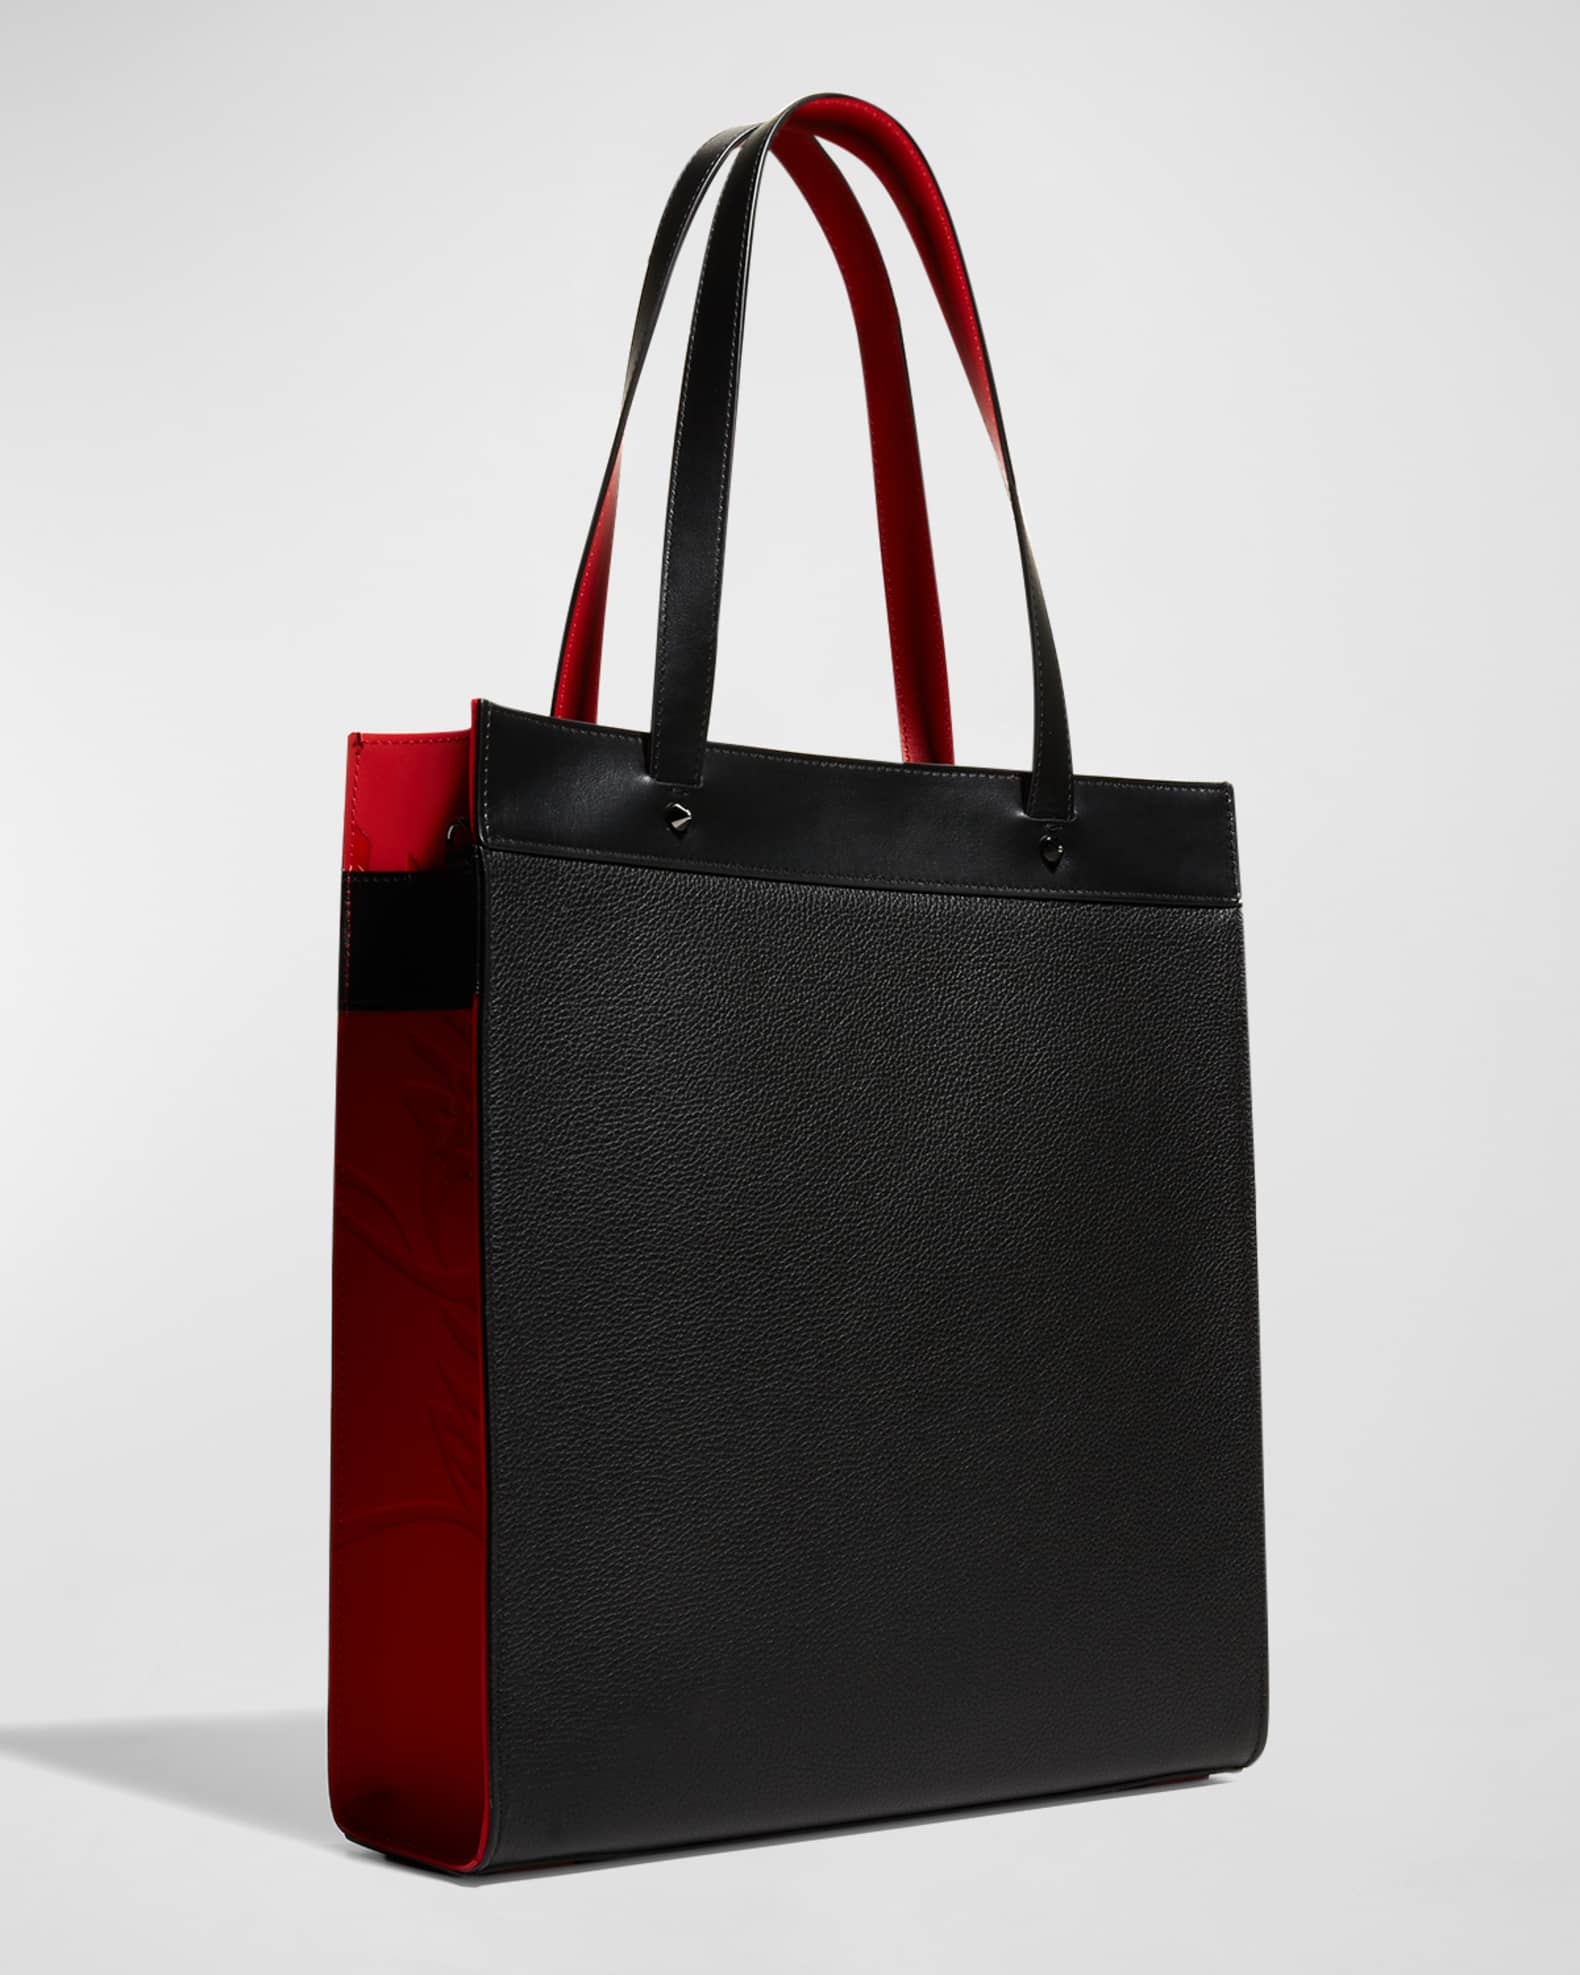 Christian Louboutin Black/Loubi/Black Ruistote Leather Tote Bag